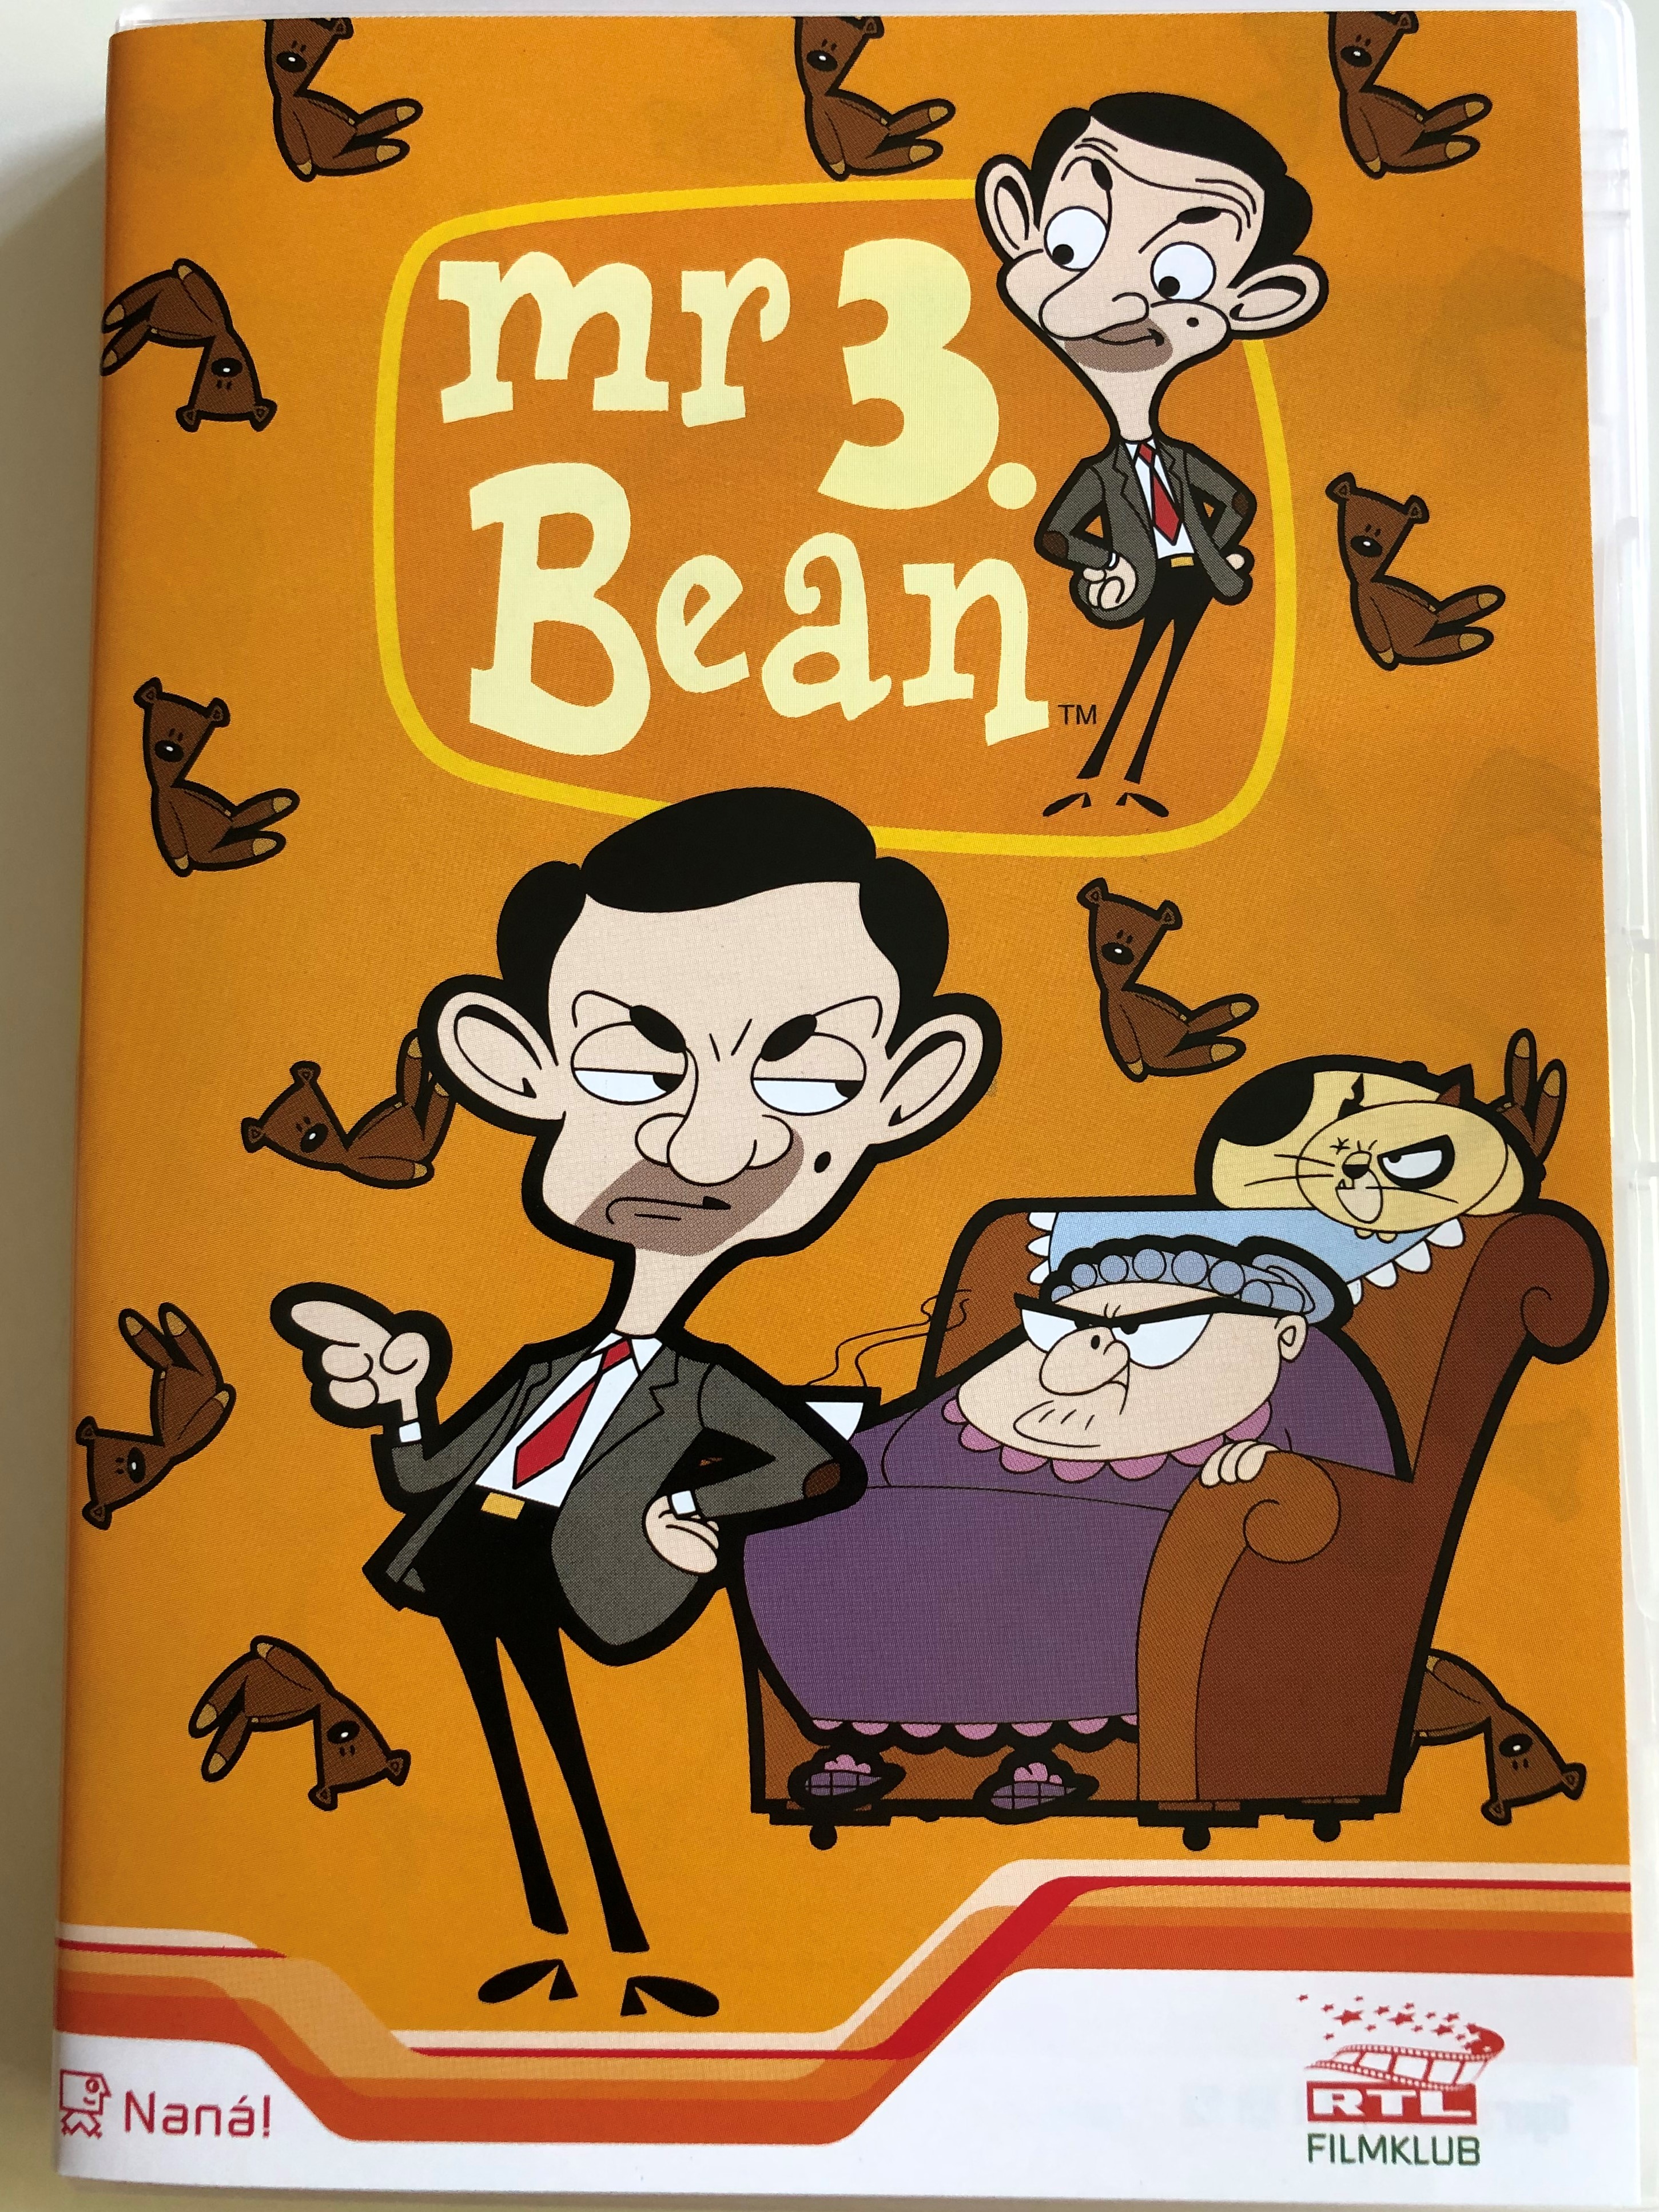 Mr. Bean - The Animated Adventures 3. DVD 2002 / 6 episodes on disc /  Hungarian Dub, uncut version - bibleinmylanguage